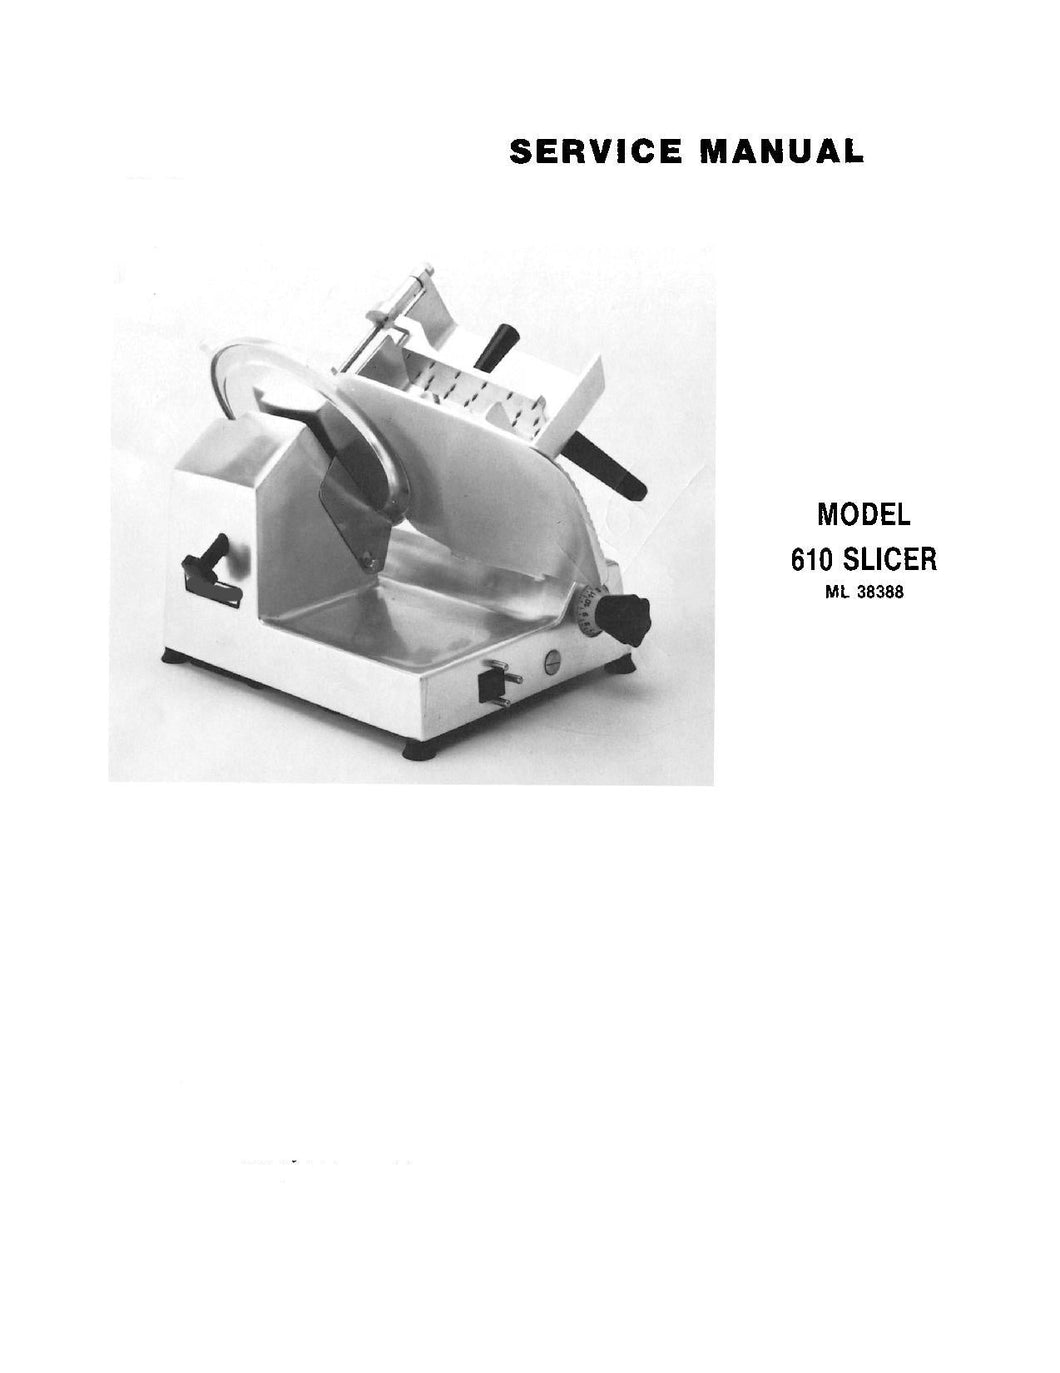 HOBART MODEL 610 SLICER SERVICE, TECHNICAL AND REPAIR MANUALS PDF